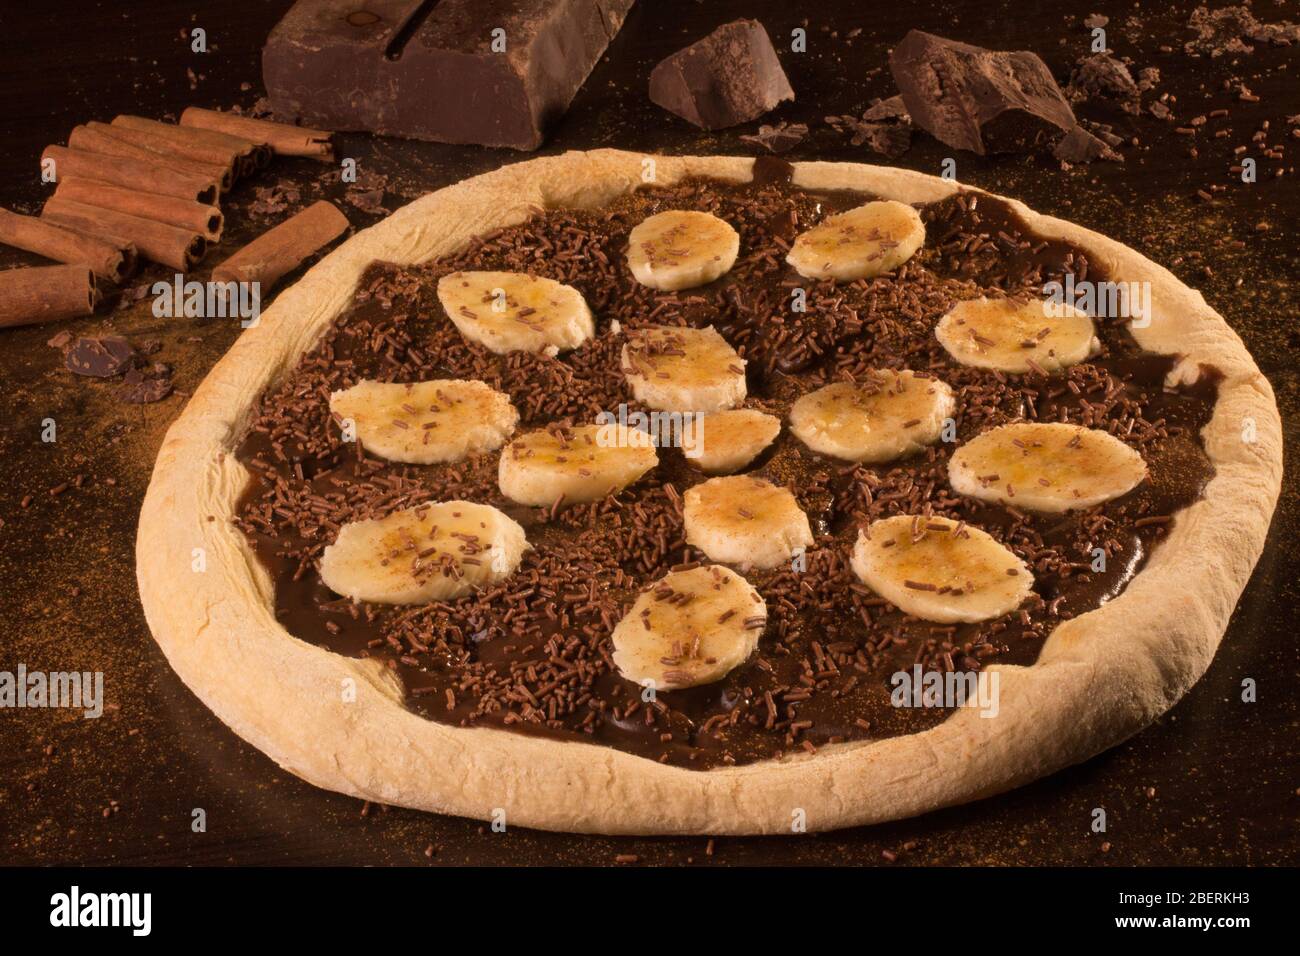 Sweet banna pizza with sliced banana and melt chocolate Stock Photo